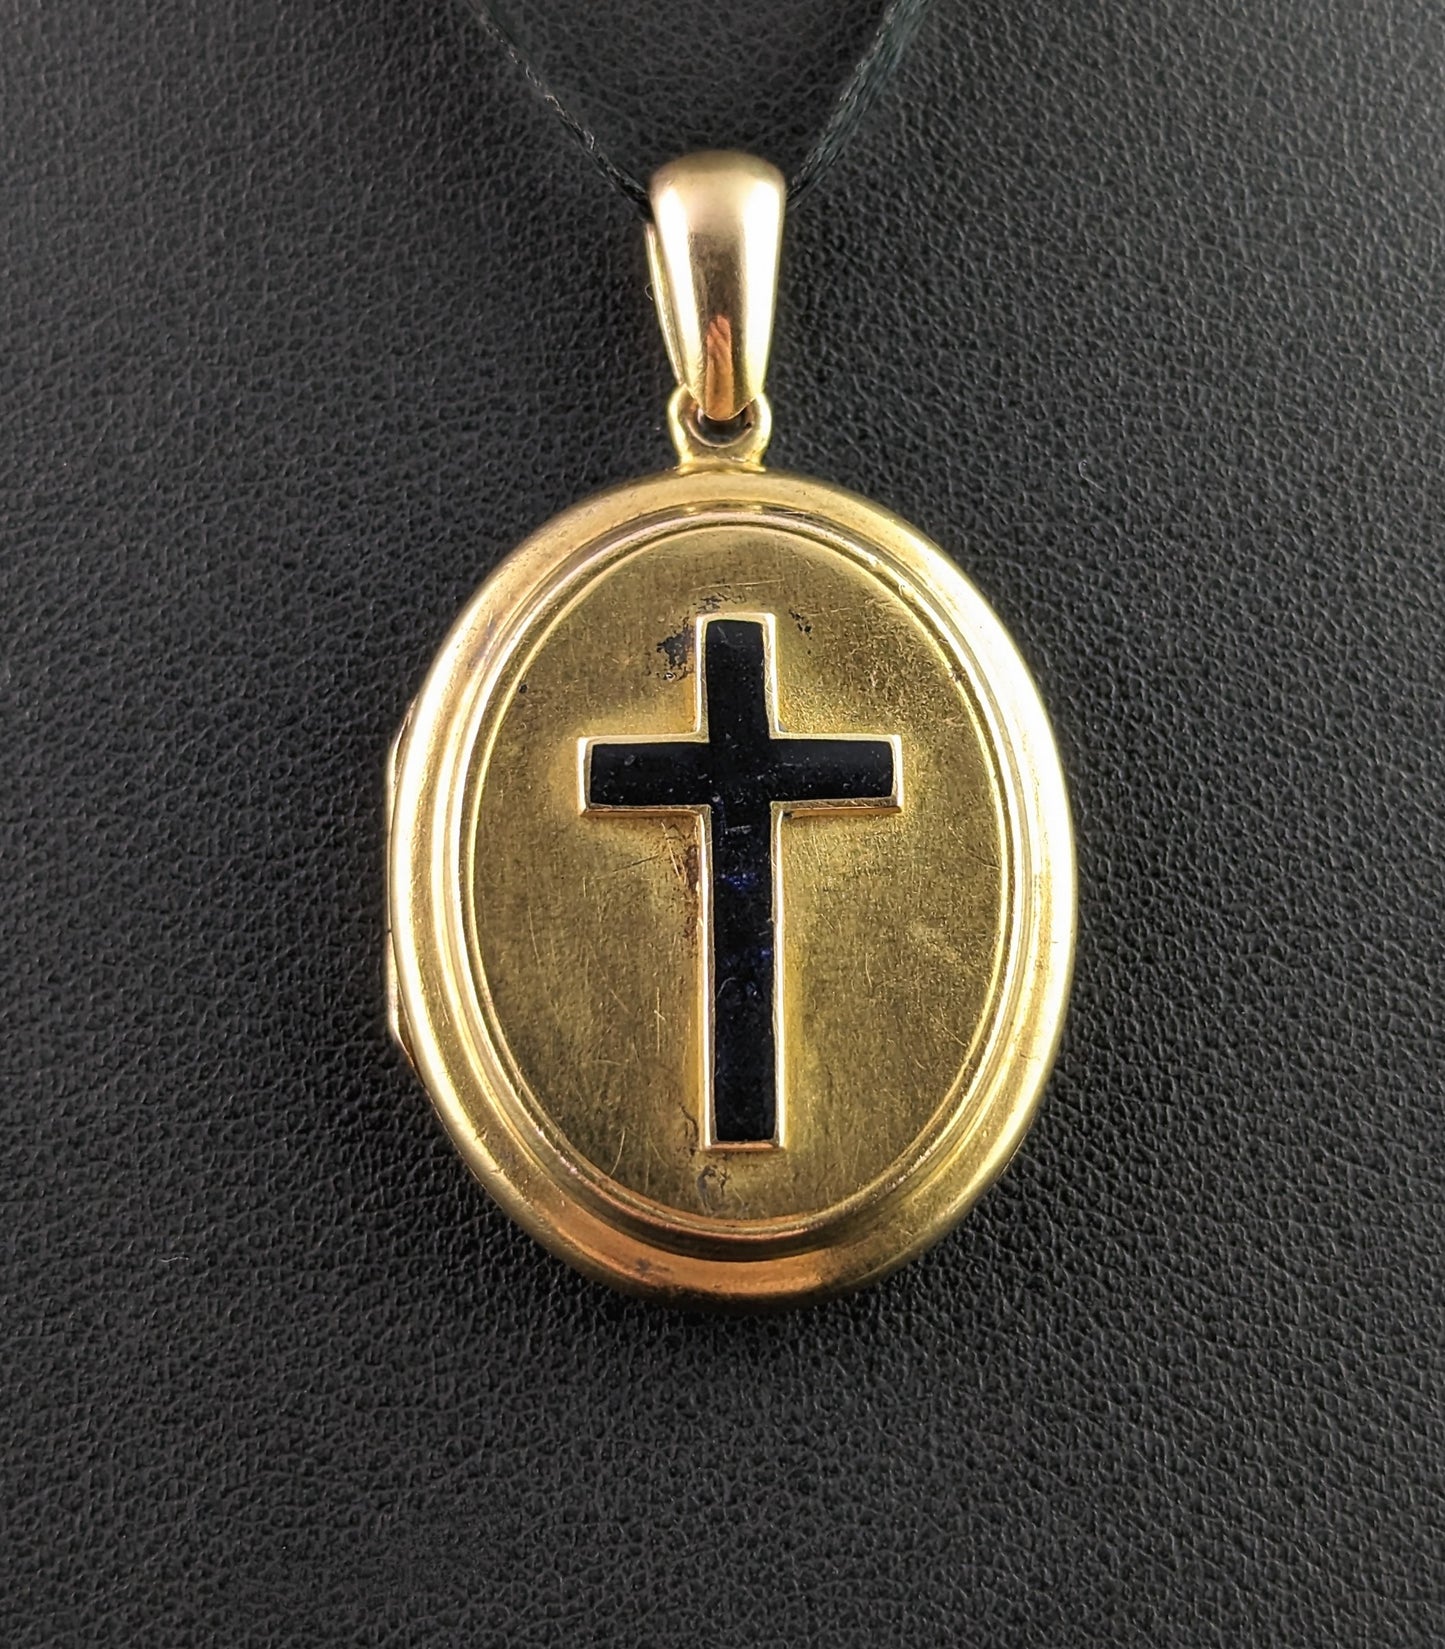 Antique 18ct gold mourning locket, Black enamel cross pendant